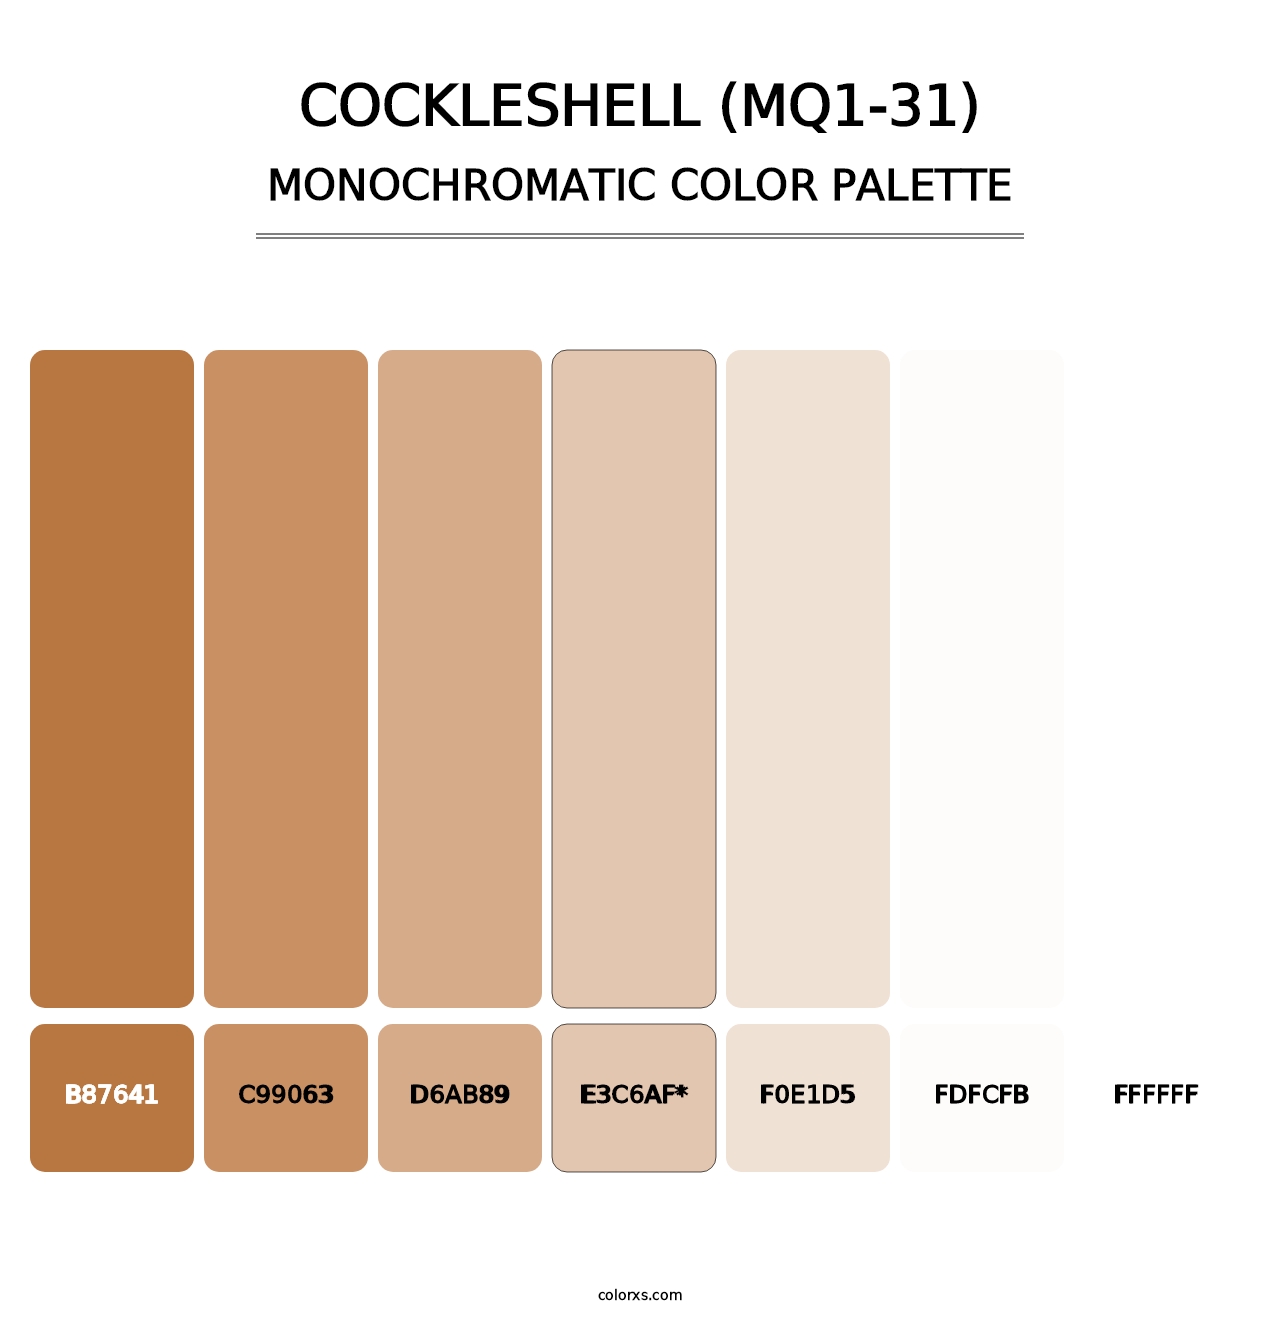 Cockleshell (MQ1-31) - Monochromatic Color Palette